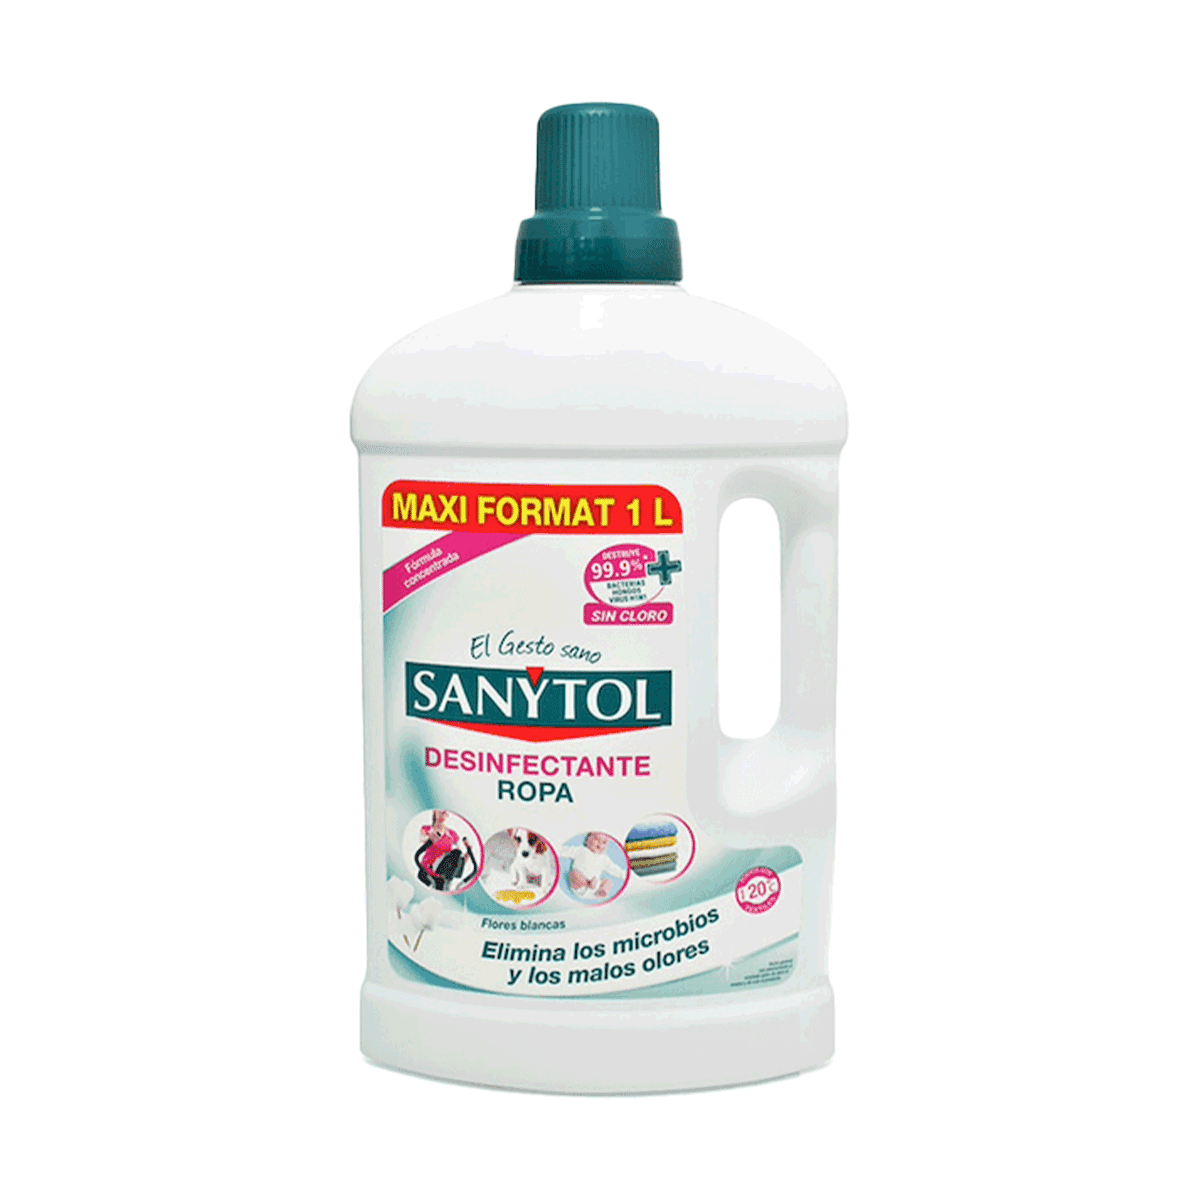 Sanytol Desinfectante Limpiador Multiusos 500ml